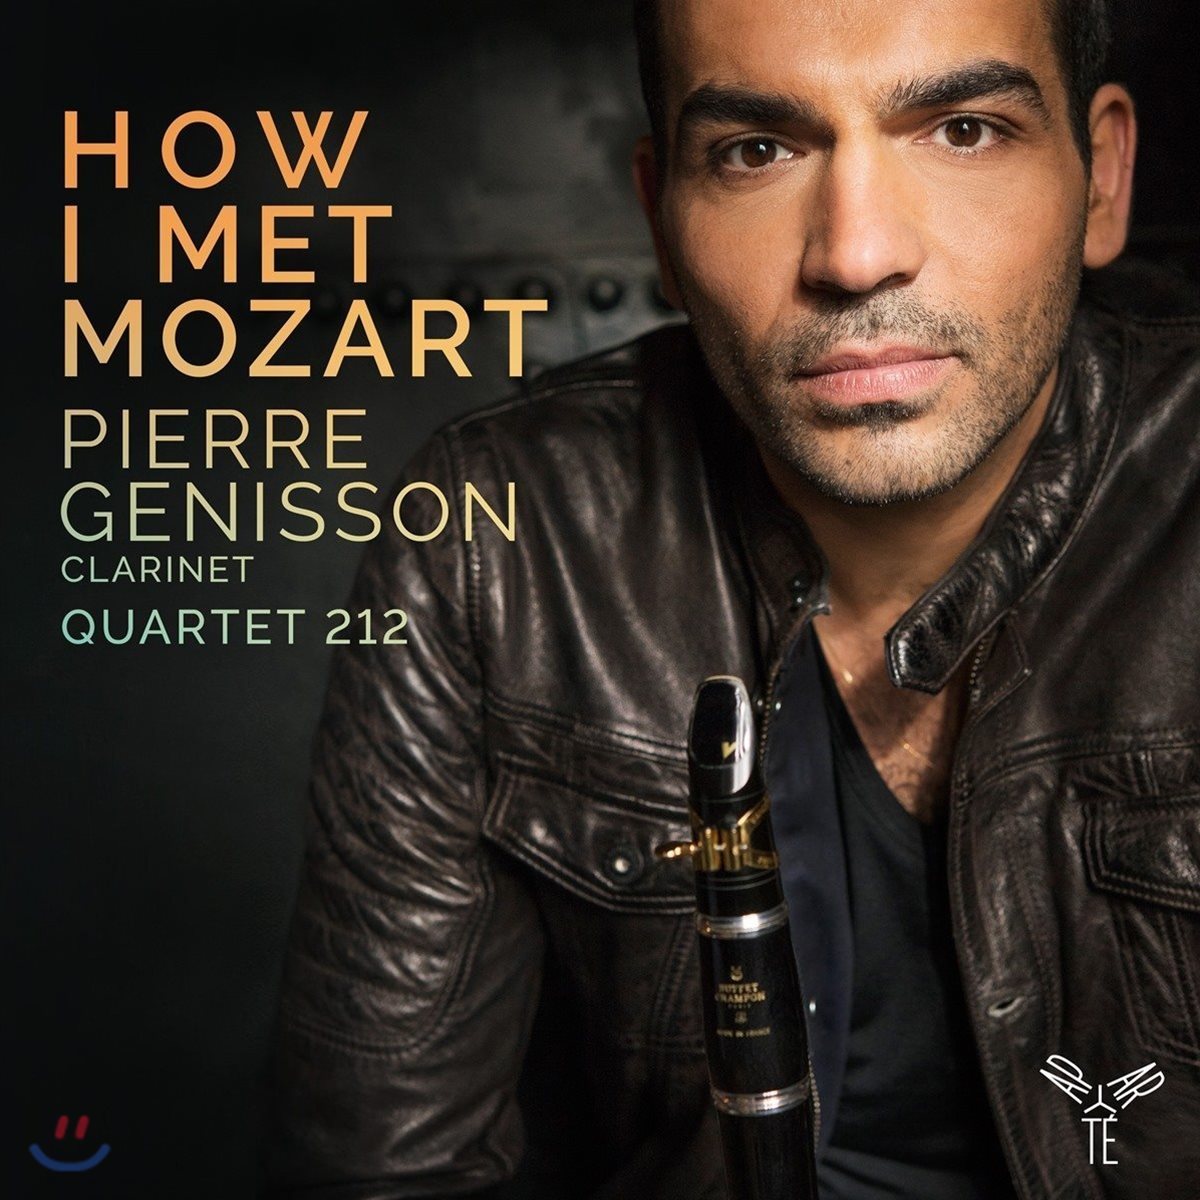 Pierre Genisson 모차르트 / 베버: 클라리넷 오중주 - 피에르 제니송, 콰르텟 212 (How I Met Mozart - Mozart / Weber: Clarinet Quintet)